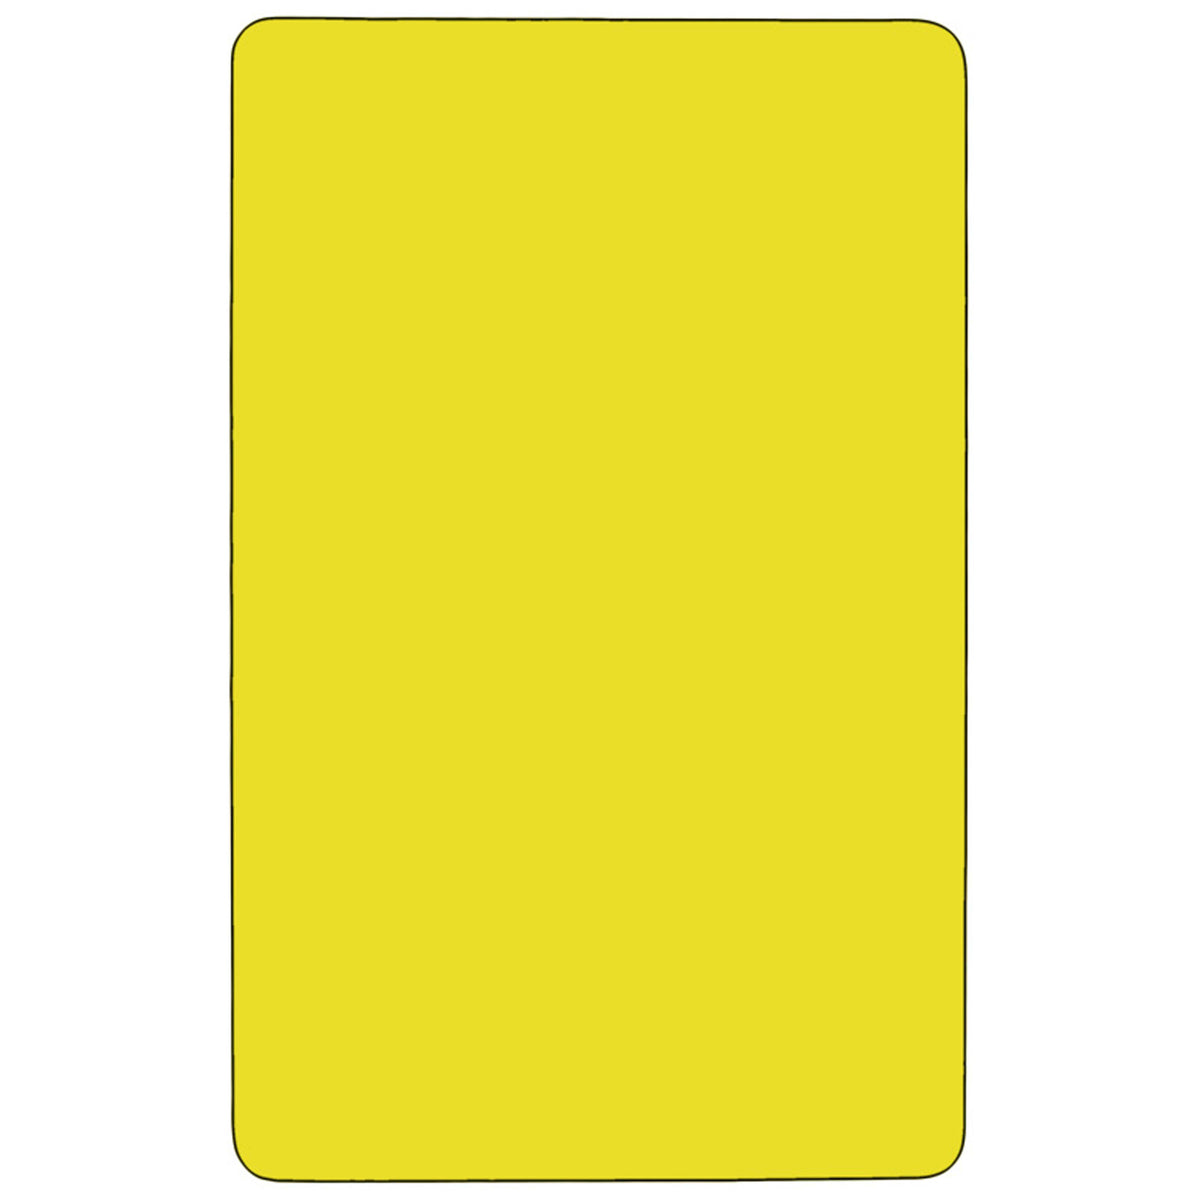 Yellow |#| 30inchW x 72inchL Rectangular Yellow HP Laminate Adjustable Activity Table